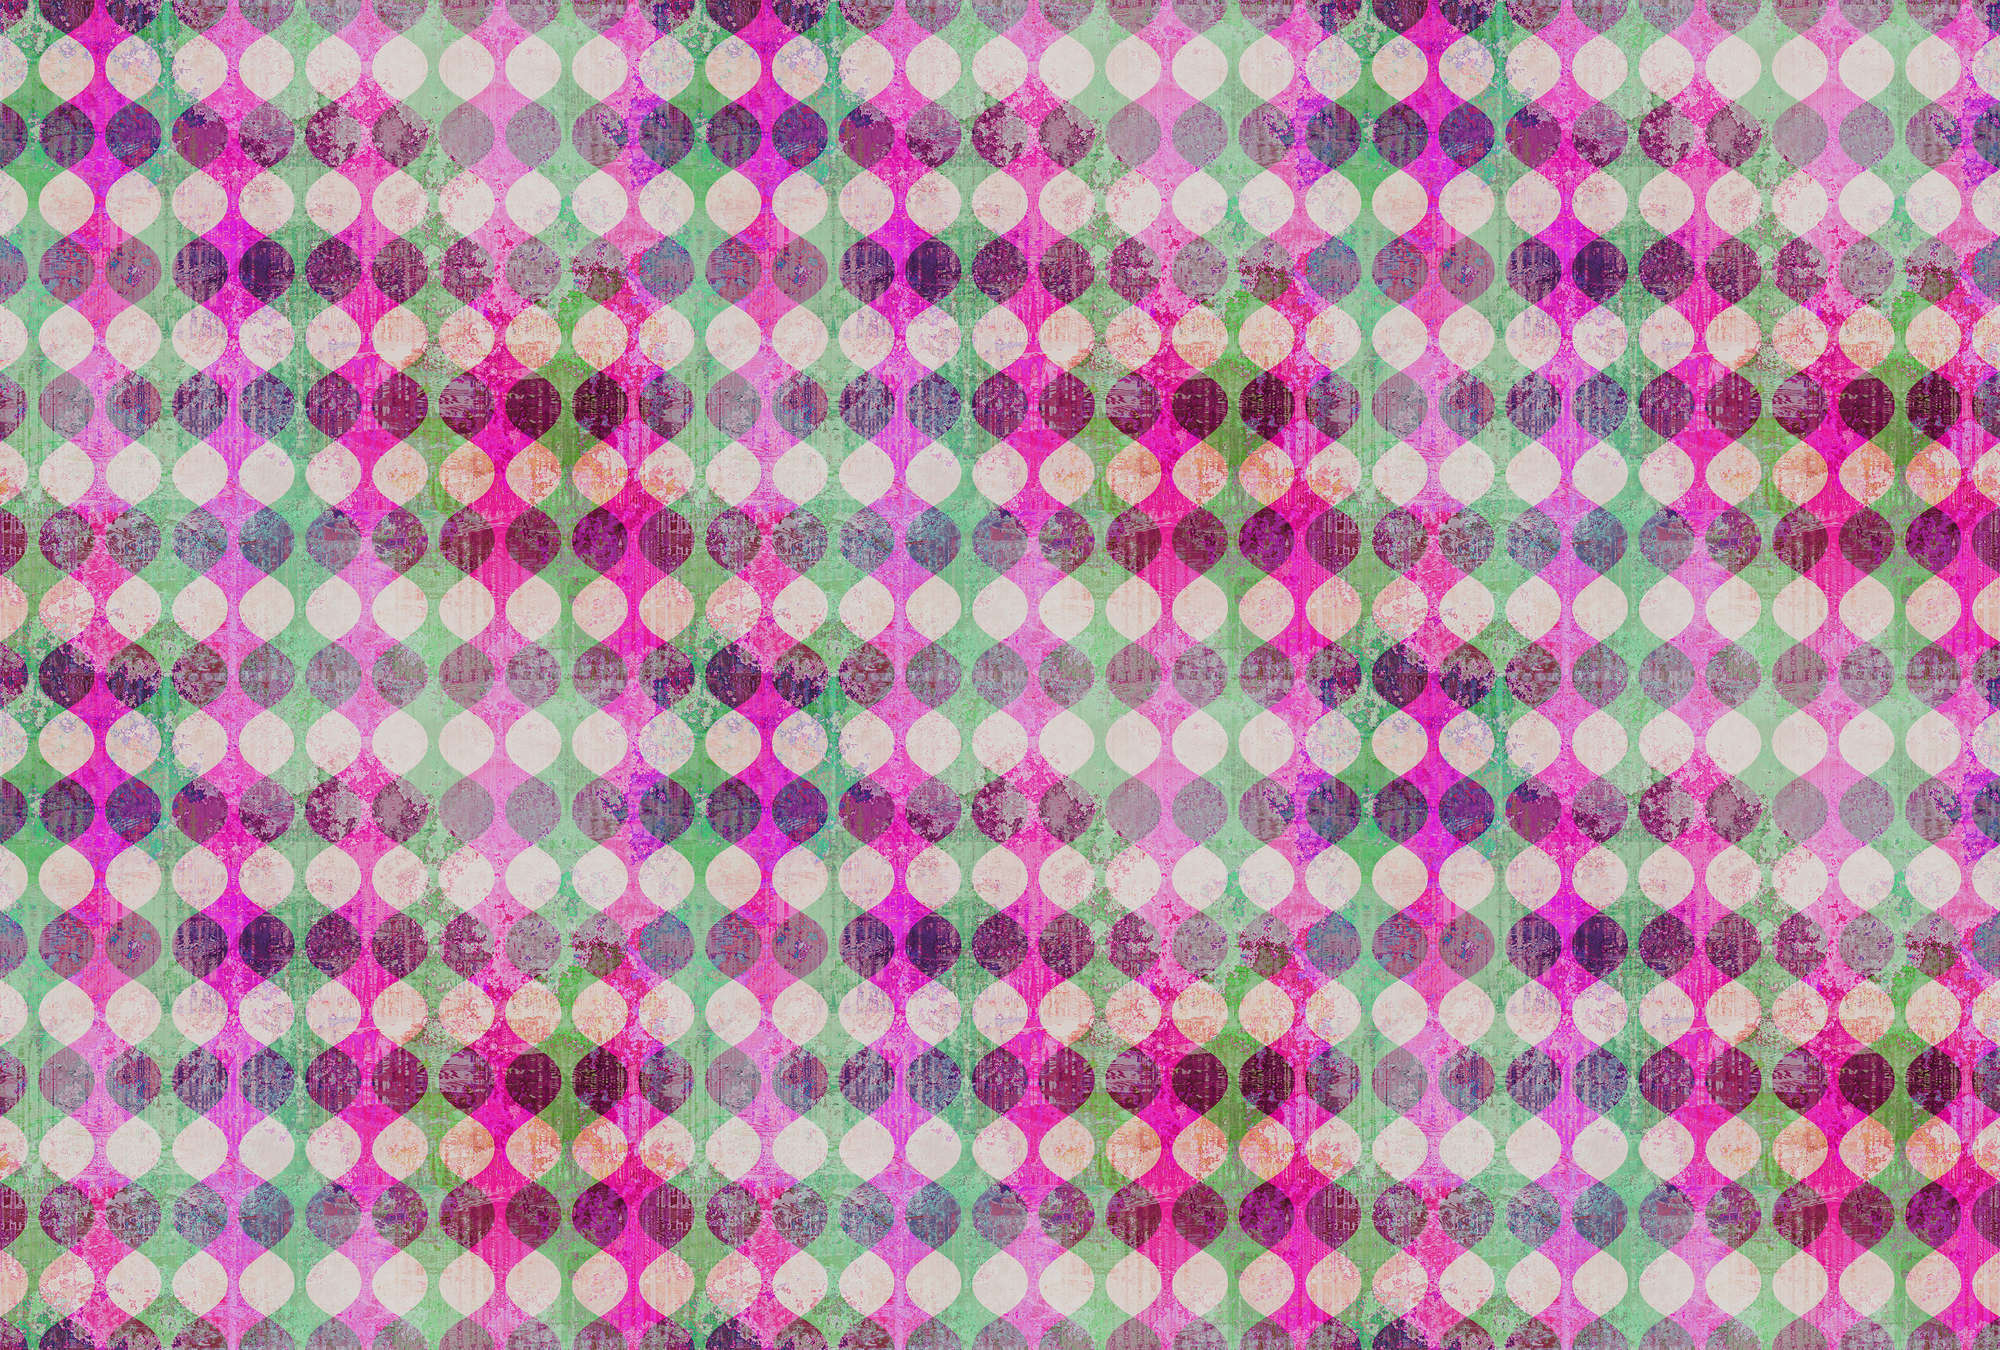             Garland 1 - Retro 70s Wallpaper - Green, Pink | Textured Nonwoven
        